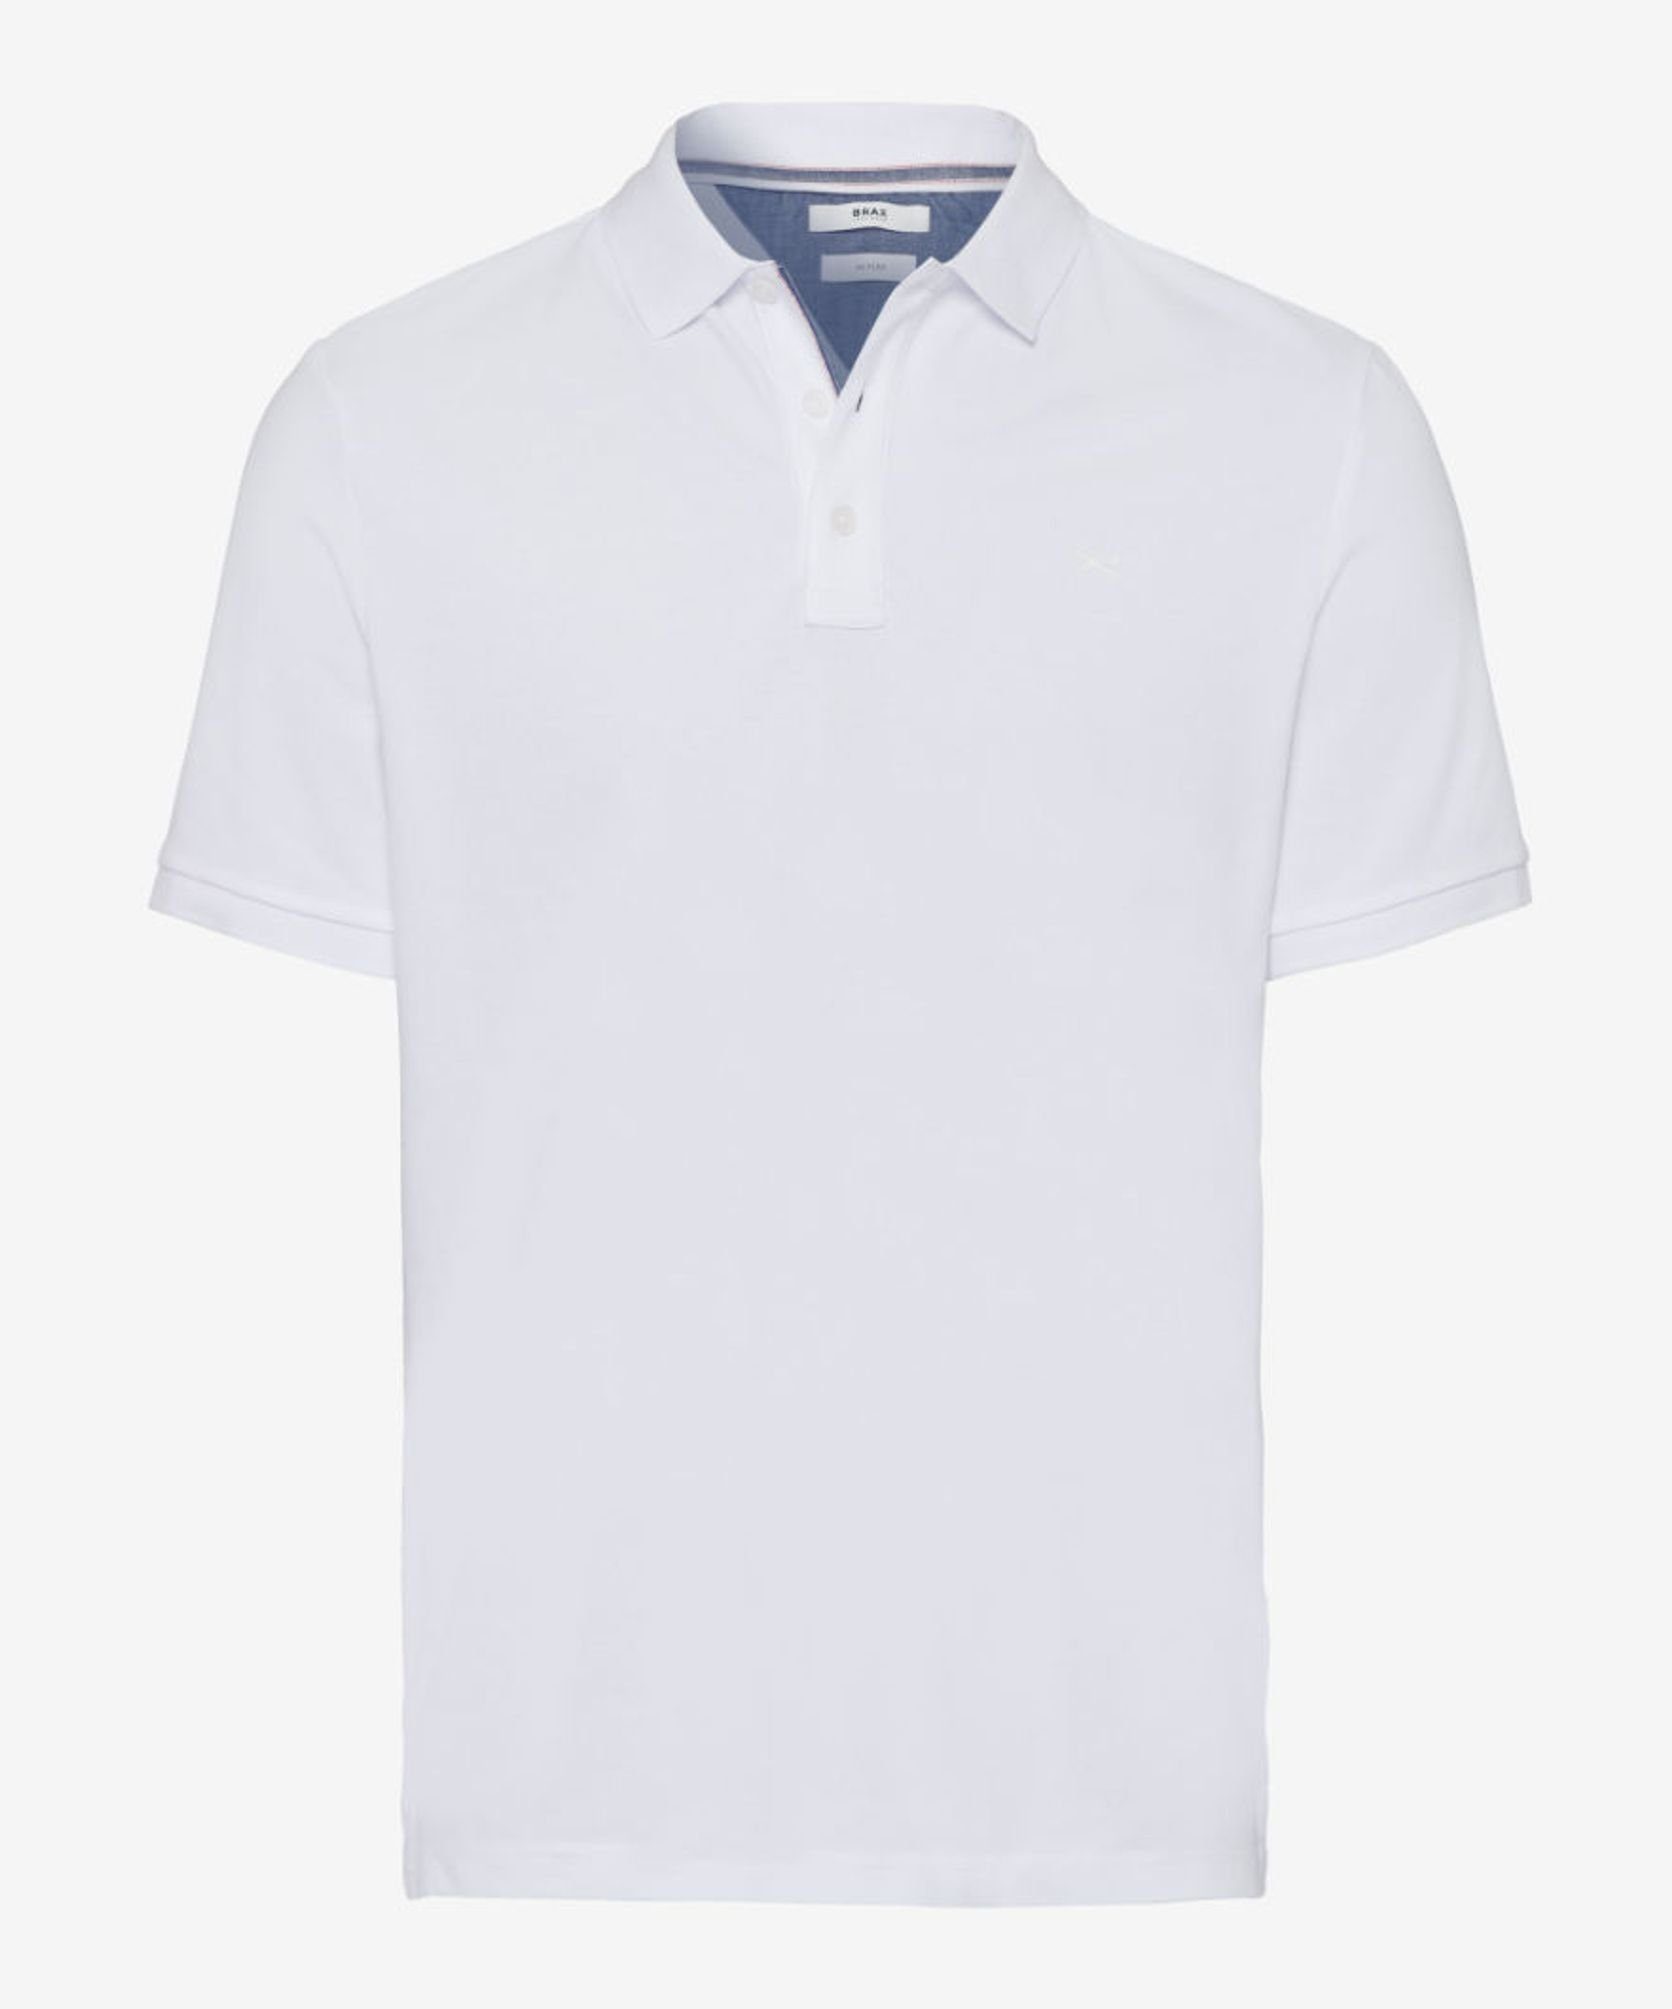 Brax Poloshirt Style Pete U (22-4908) Poloshirt White (99)